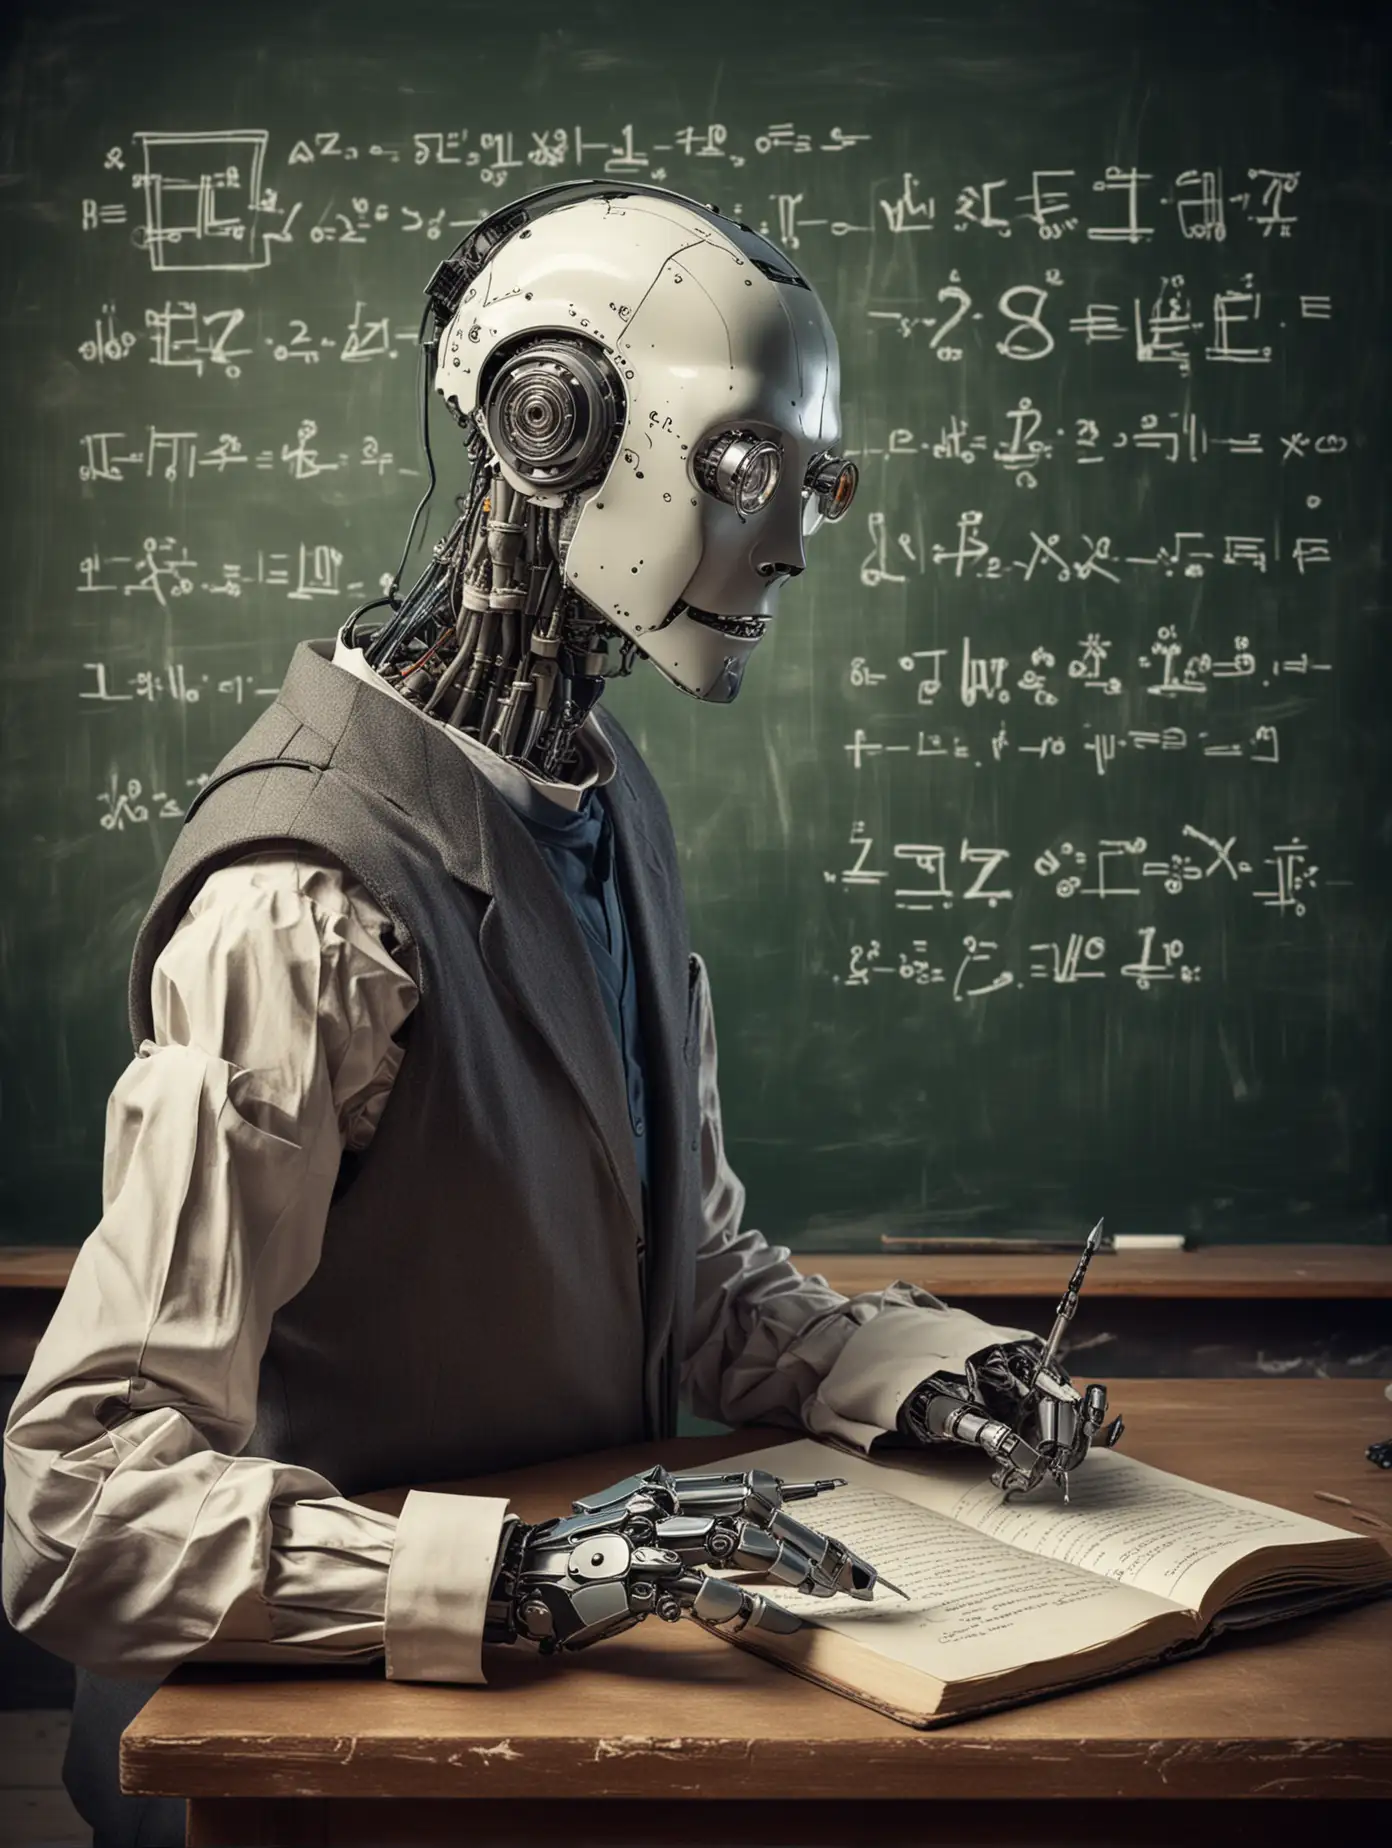 Intelligent Robot School Professor Writing Mathematical Formula on Blackboard